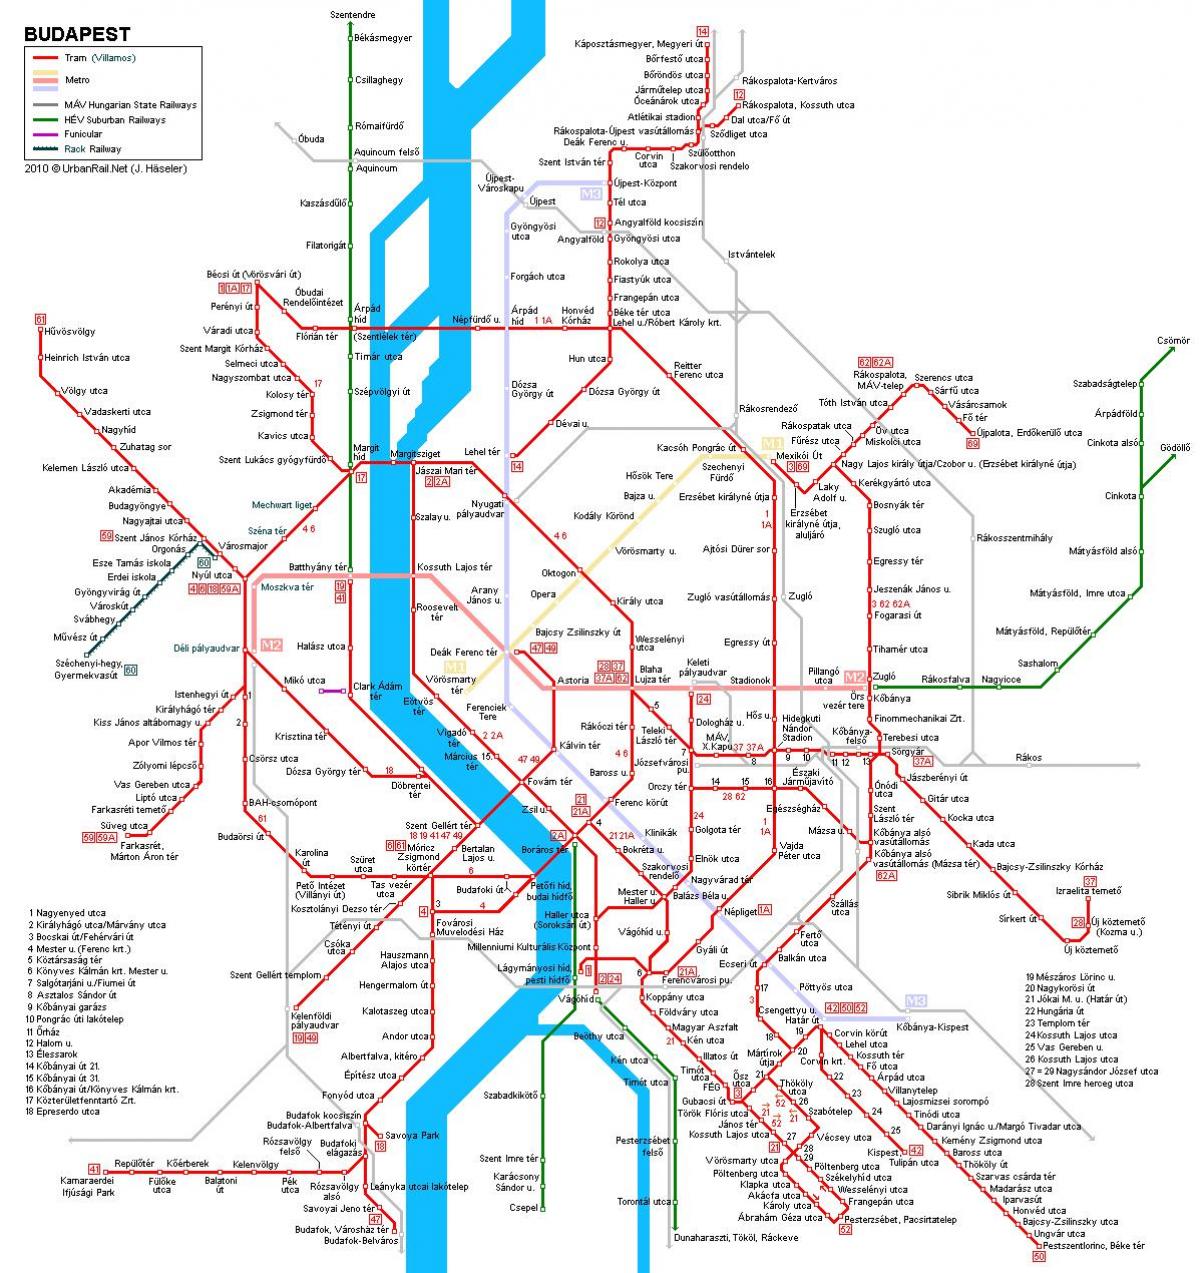 аеродром Будимпешта мапа метро 